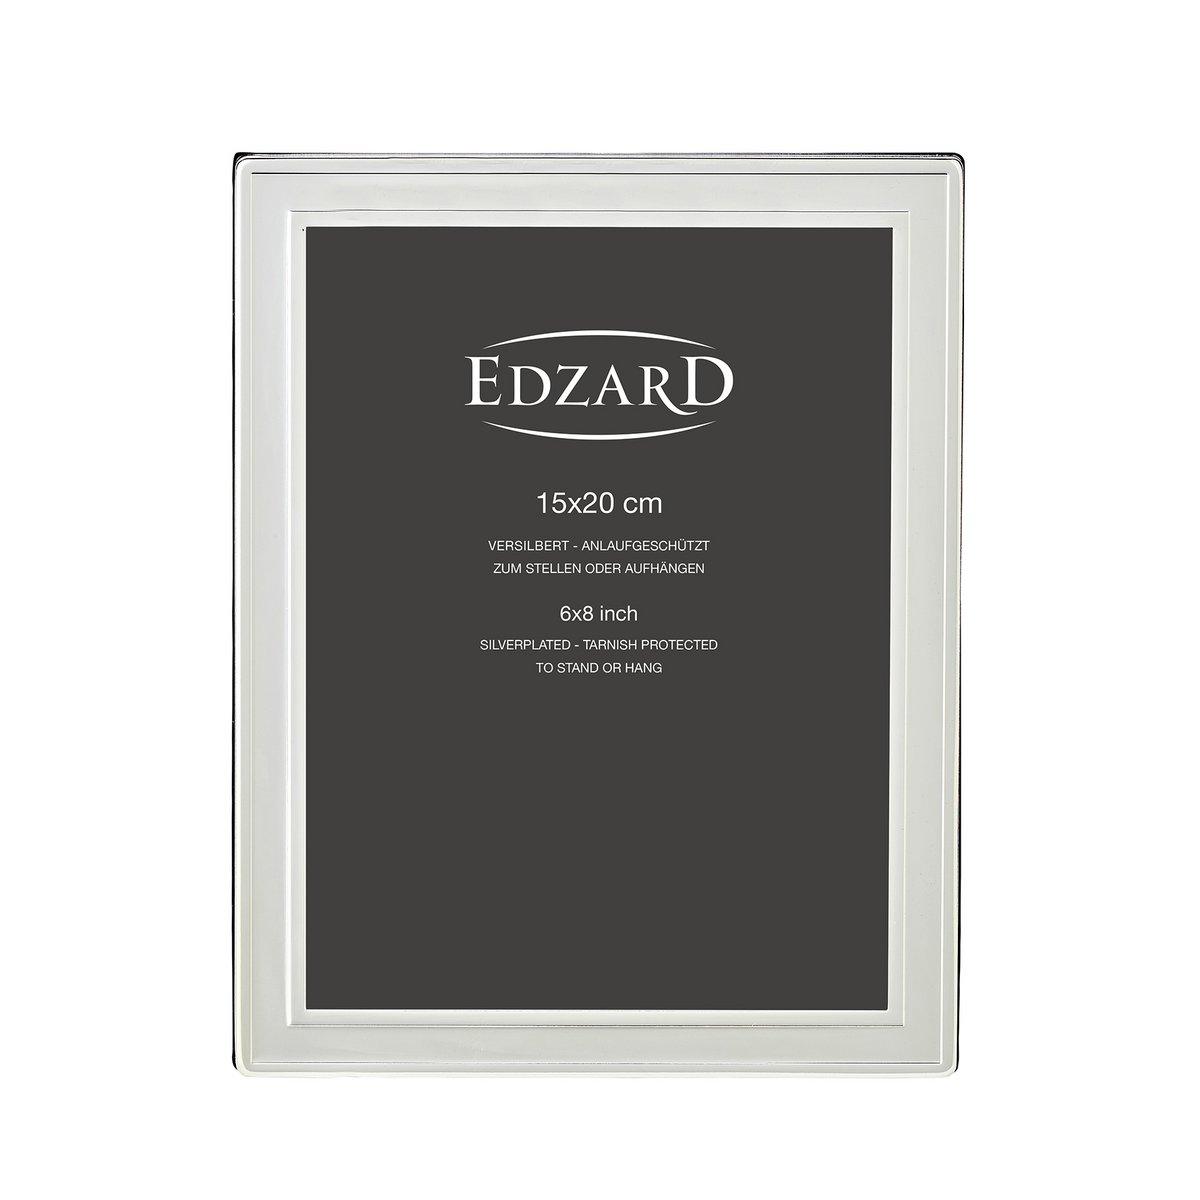 EDZARD Fotorahmen Bilderrahmen Nardo für Foto 15 x 20 cm, edel versilbert, anlaufgeschützt, 2 Aufhänger - HomeDesign Knaus